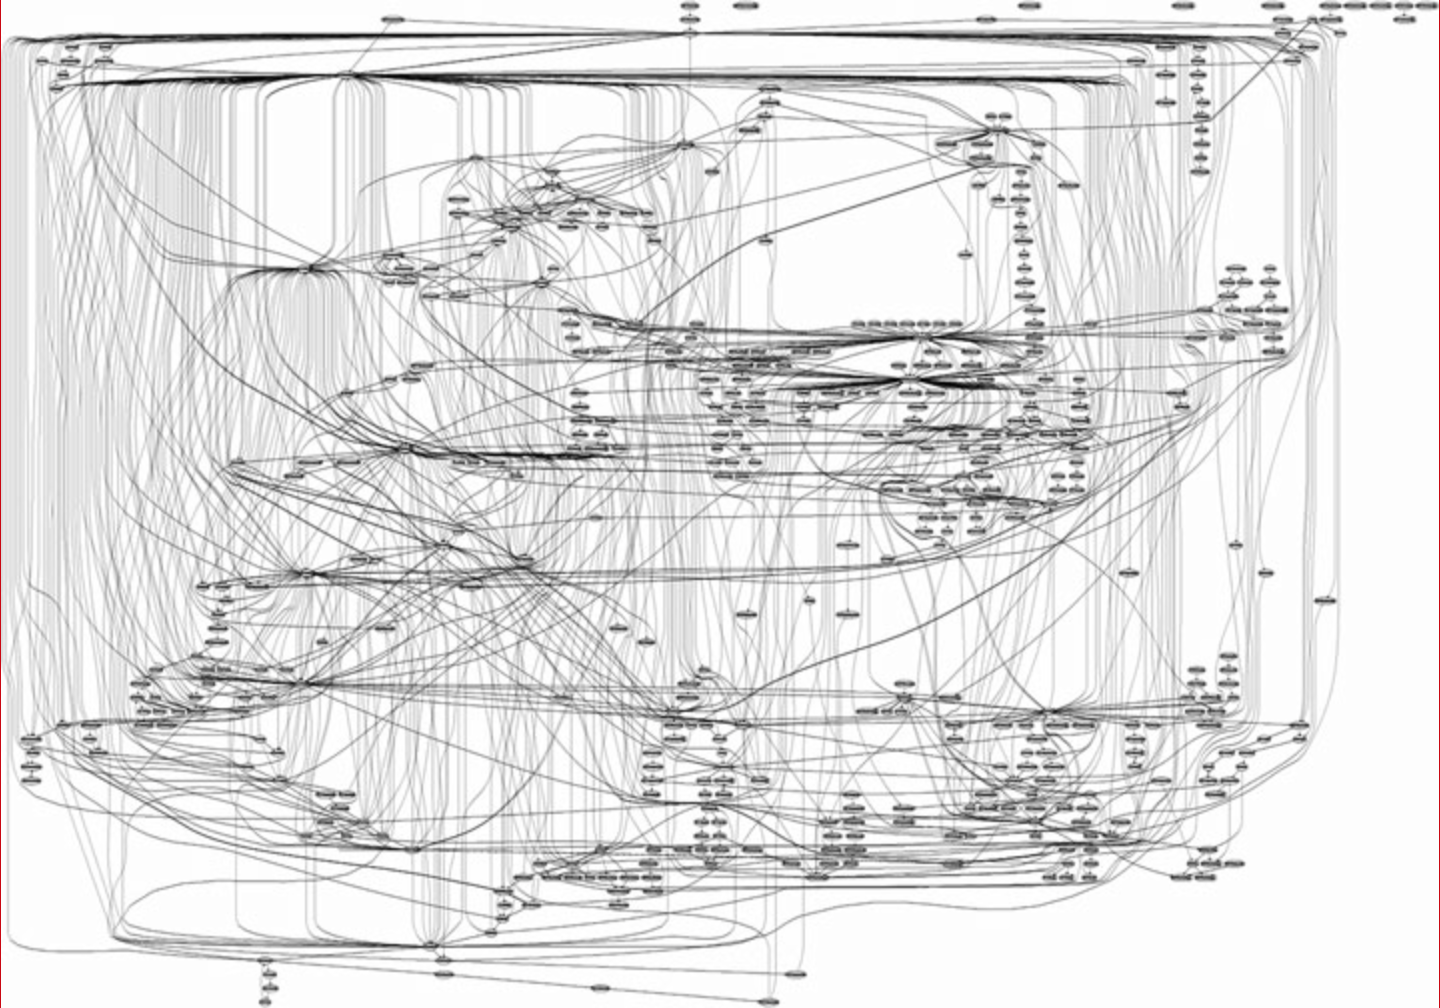 Spaghetti code visualization